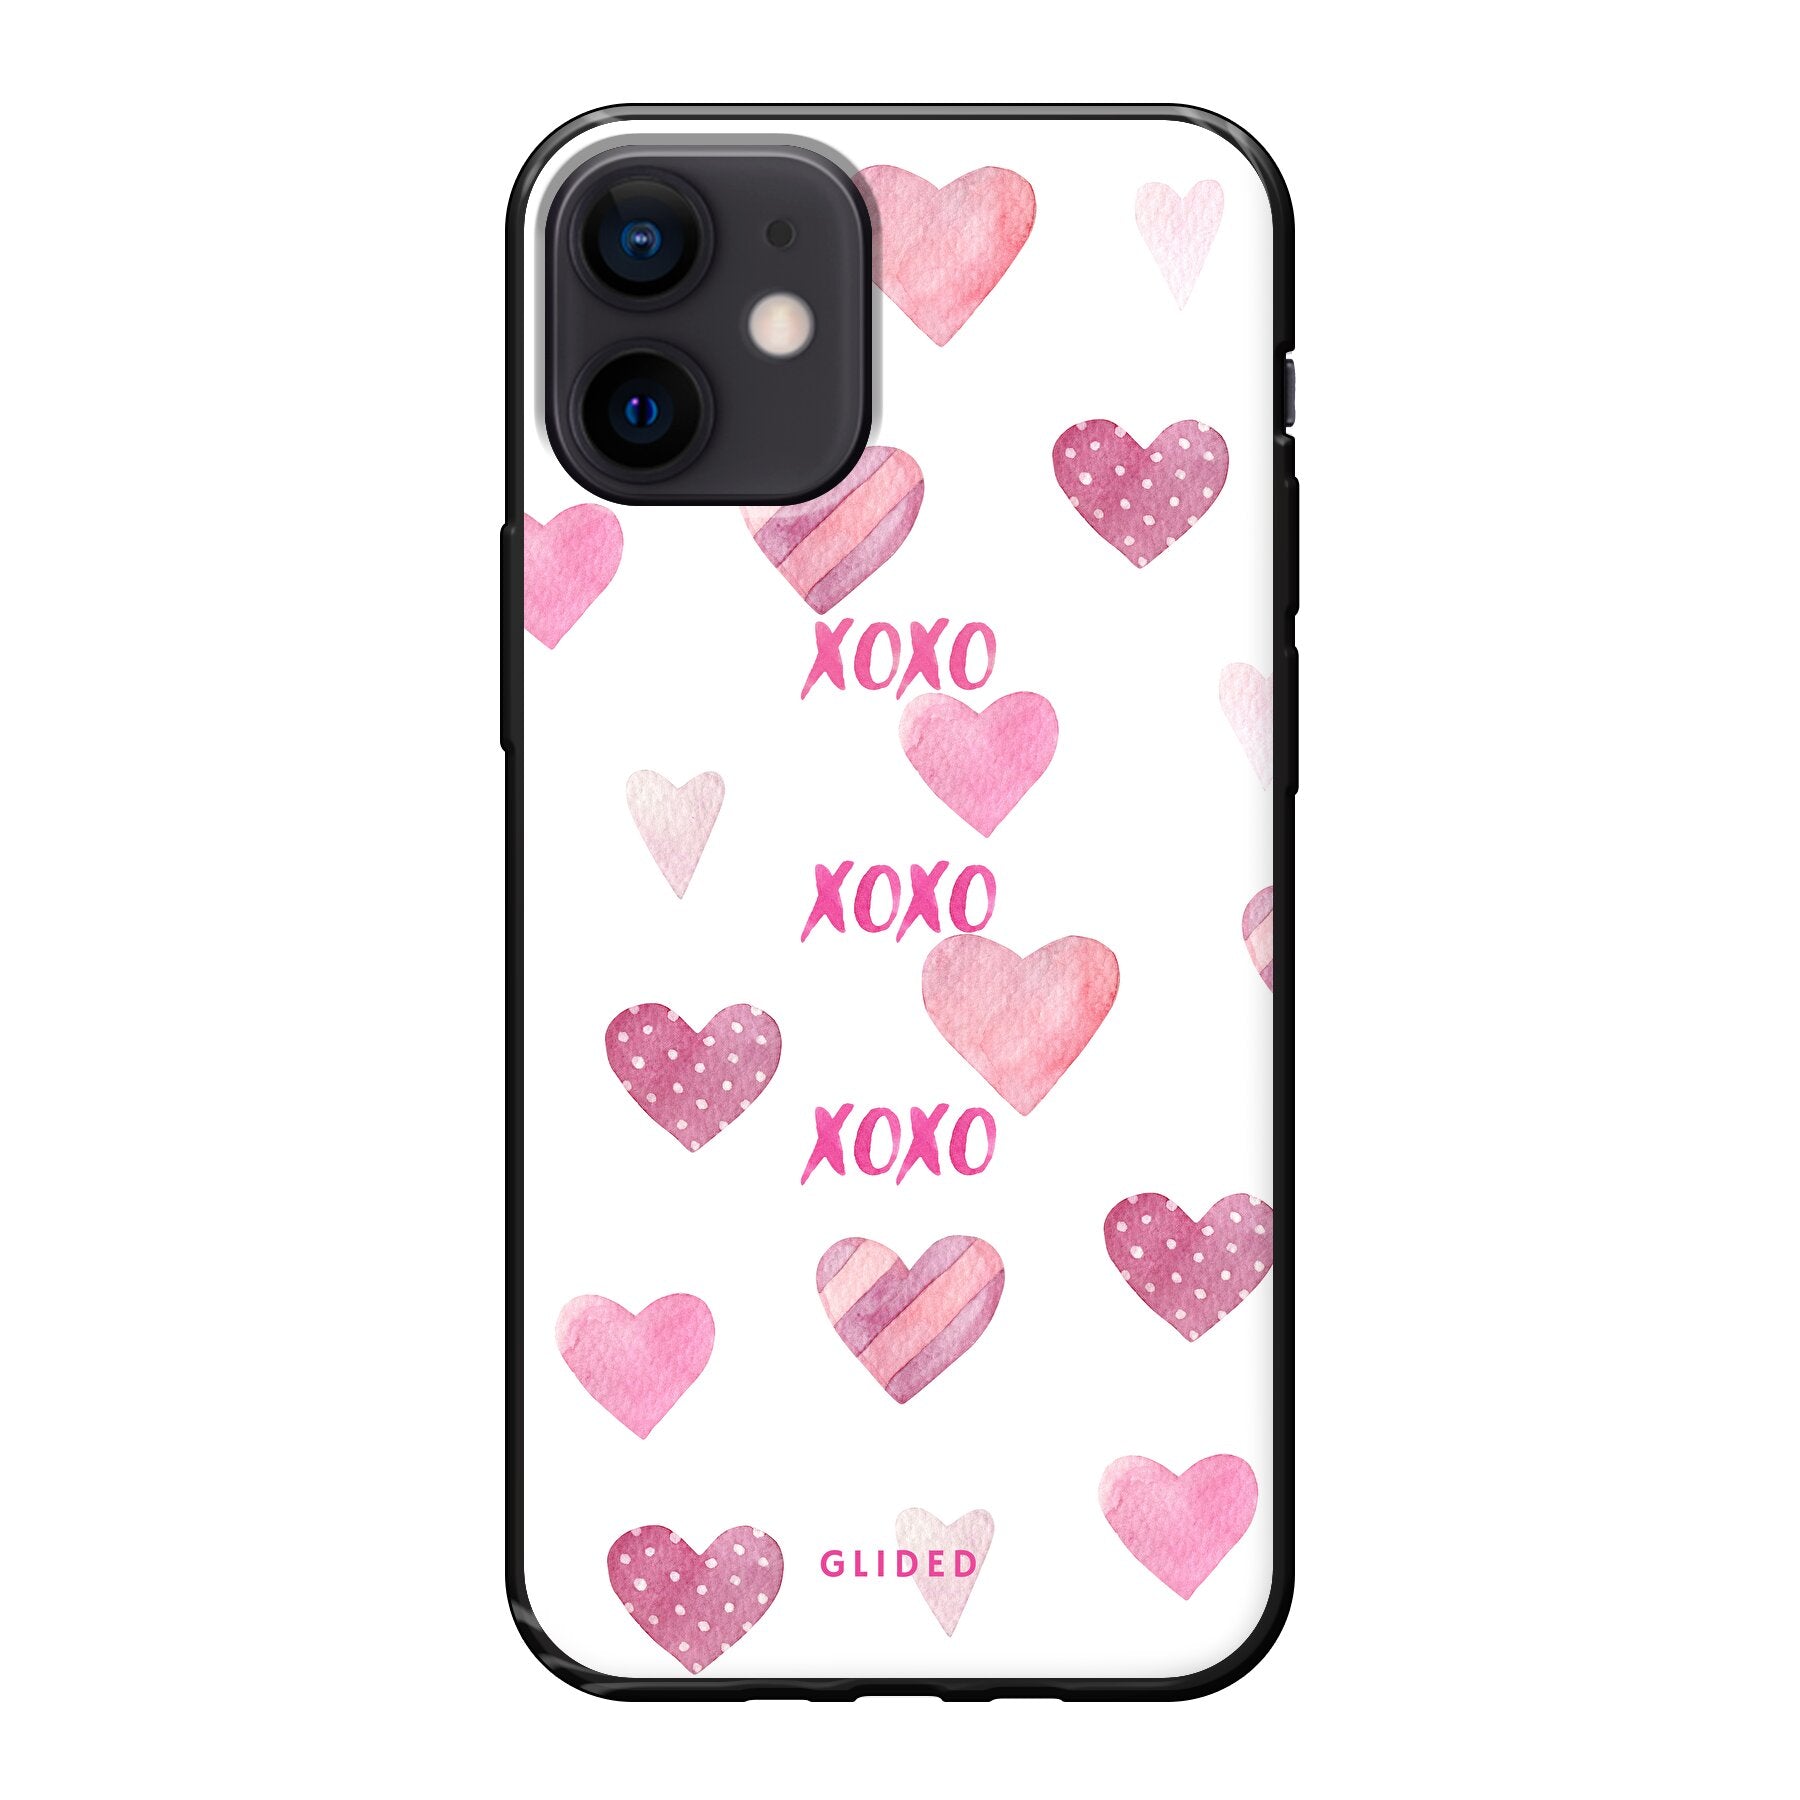 Xoxo - iPhone 12 mini - Soft case